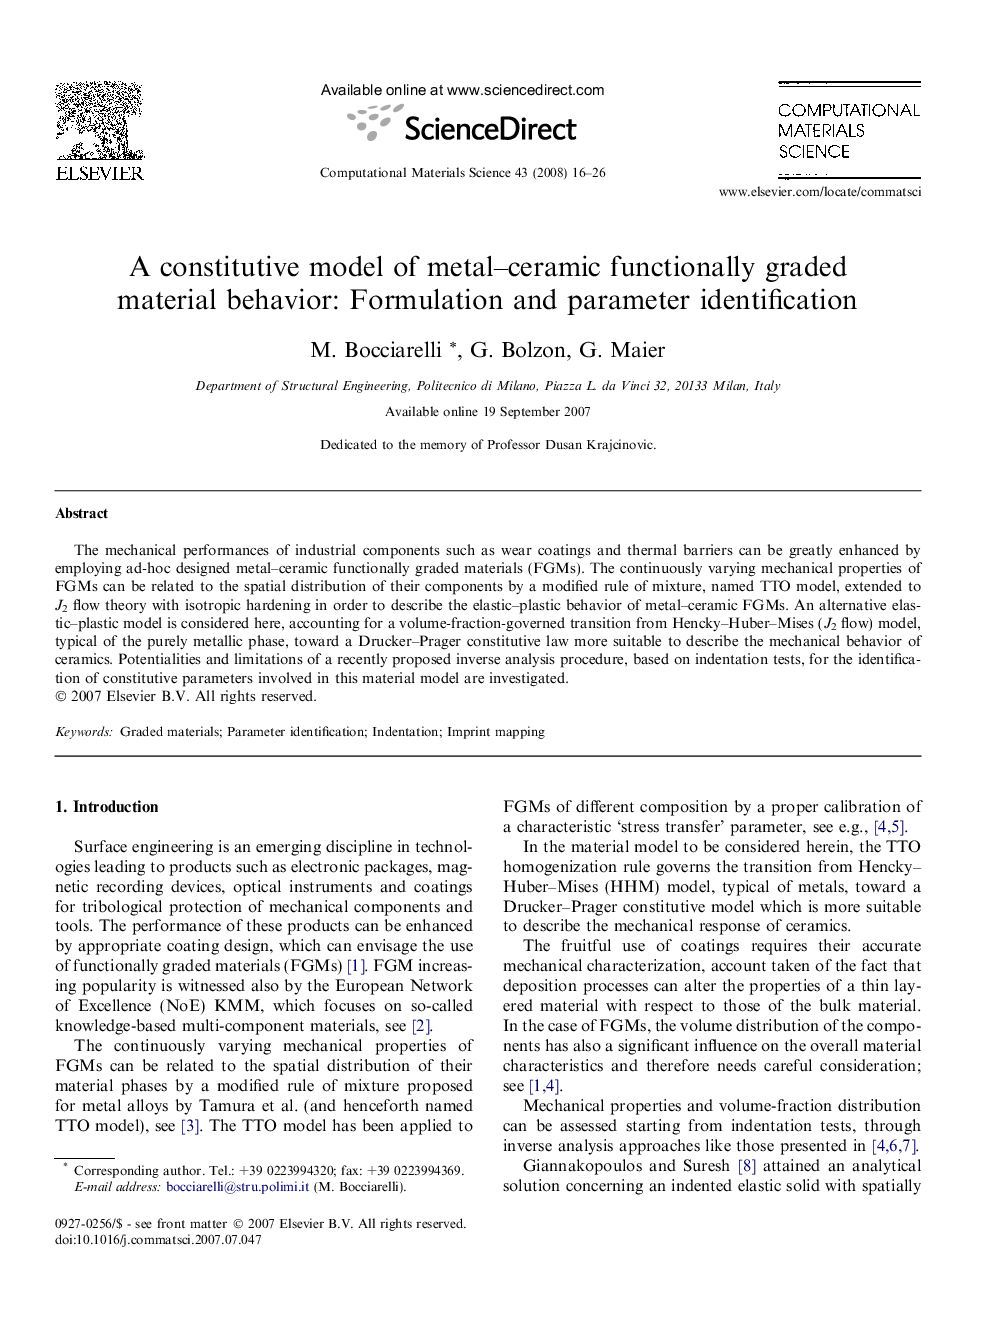 A constitutive model of metal-ceramic functionally graded material behavior: Formulation and parameter identification